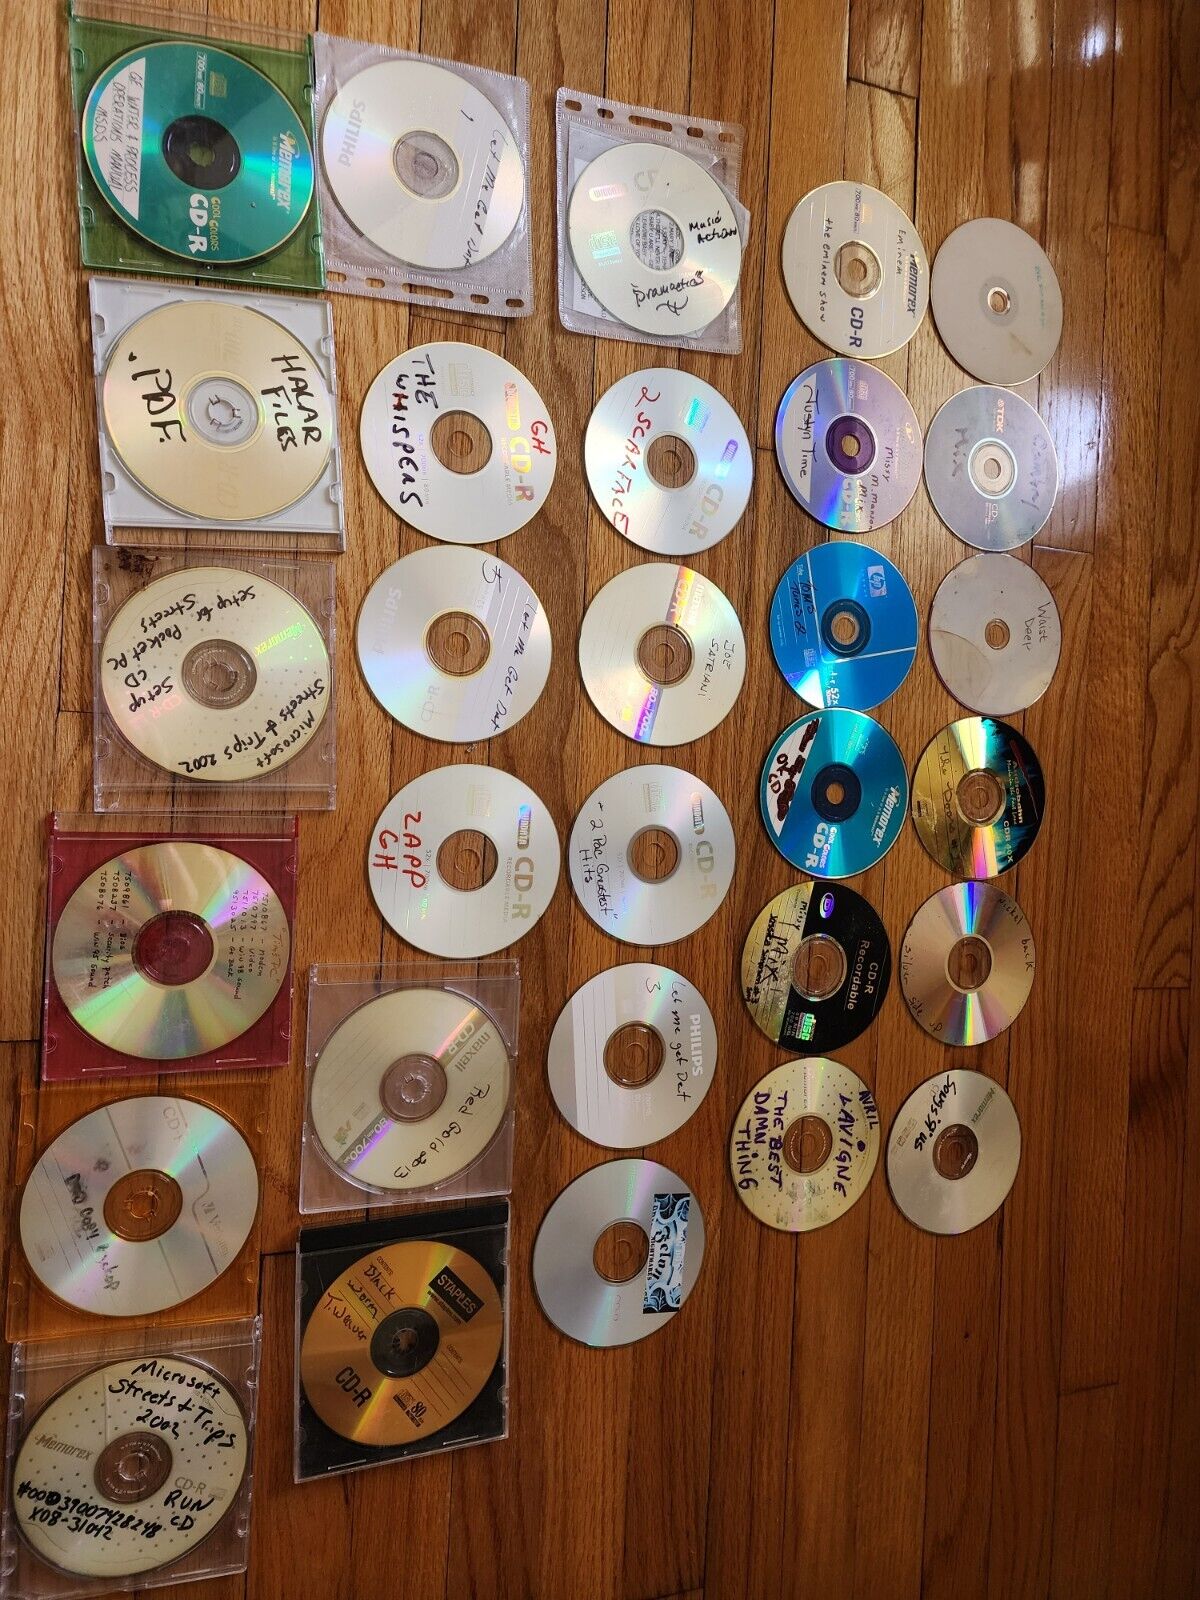 Lot of 38 CD-R discs